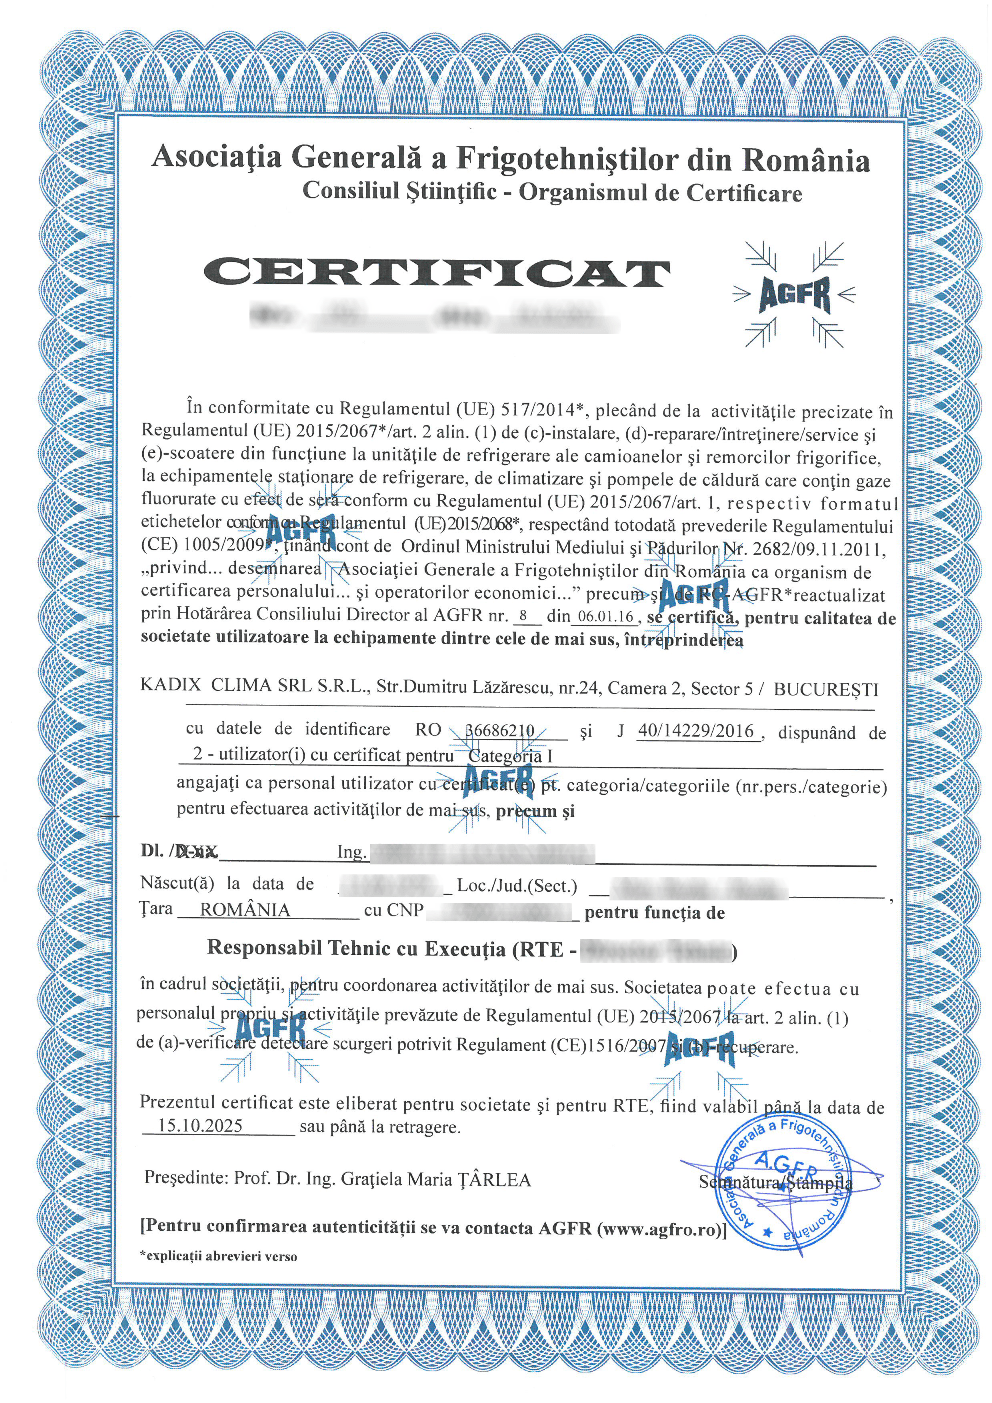 Autorizatie AGFR, firma instalatii certificata AGFR